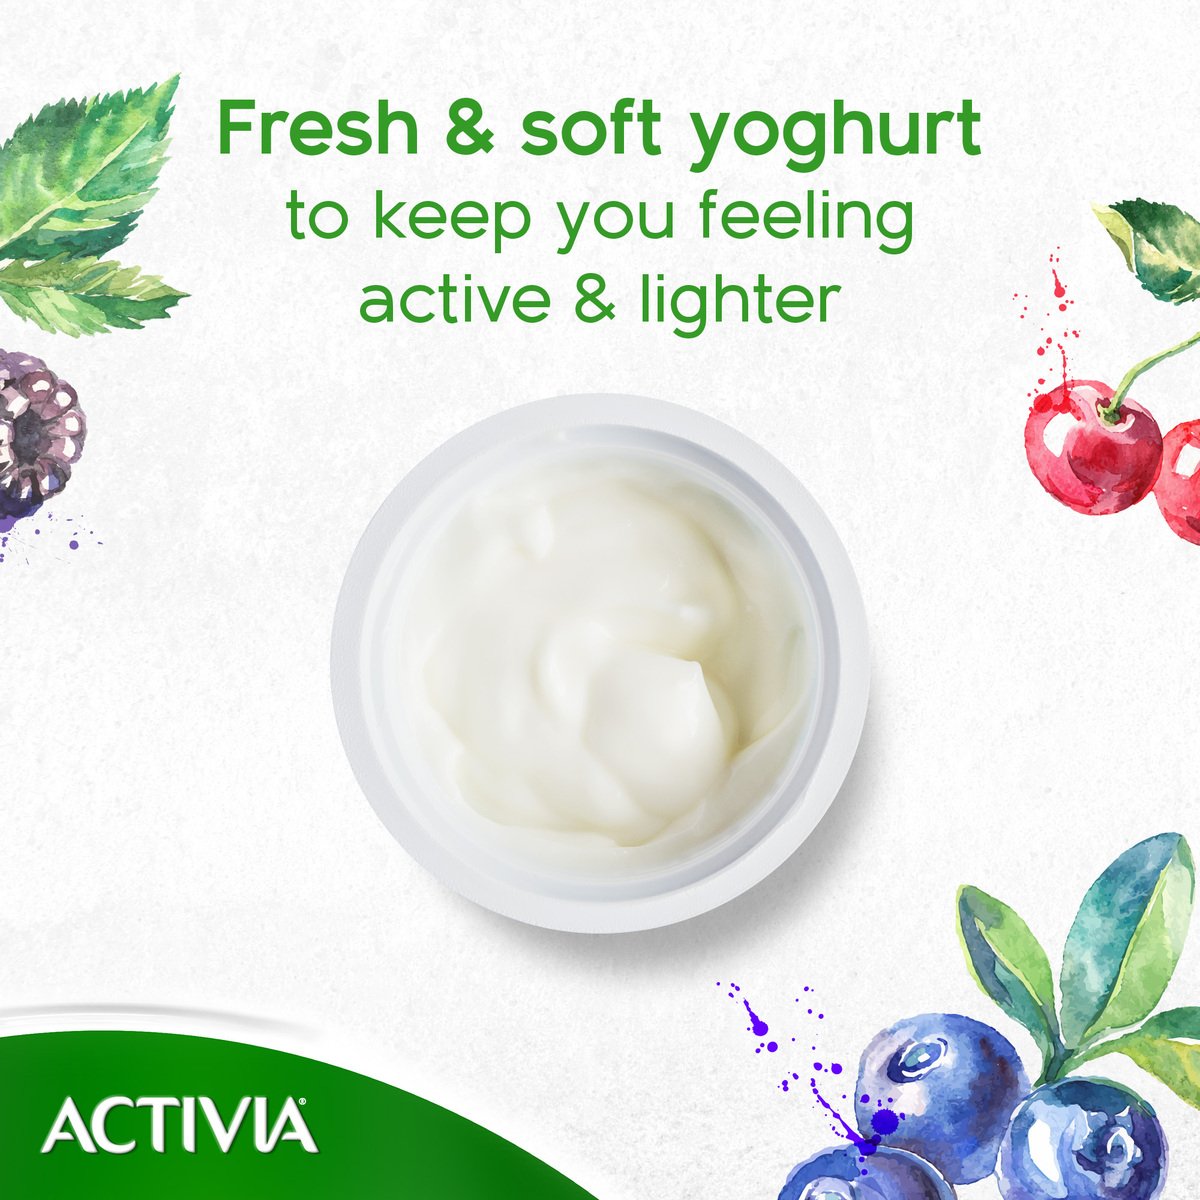 Activia Set Yoghurt Low Fat 150 g